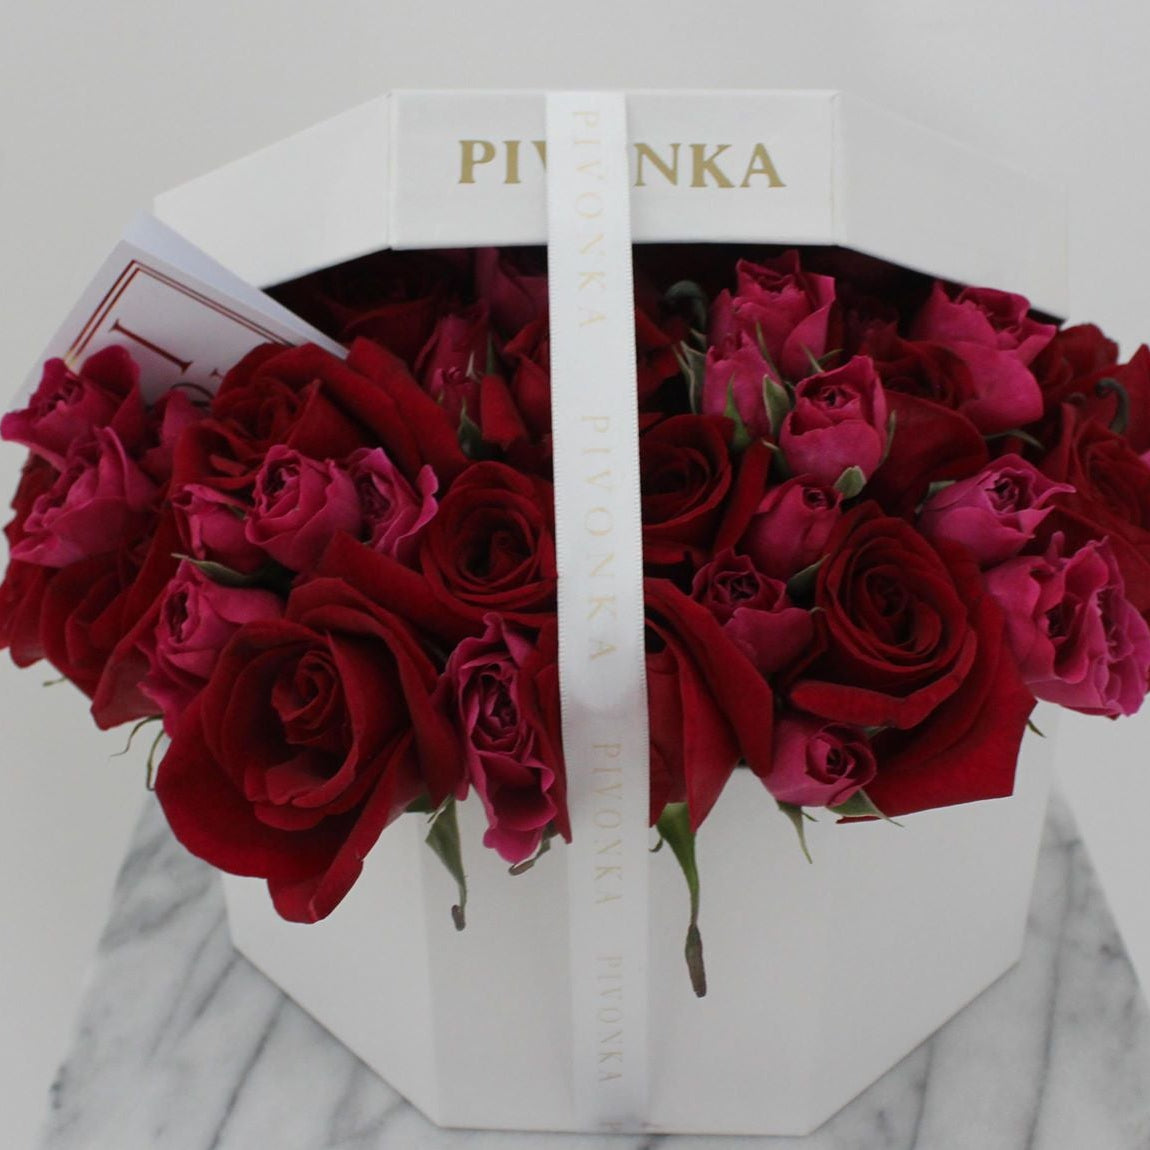 Pivonka Flores Monterrey. Caja octagonal con rosas rojas. 